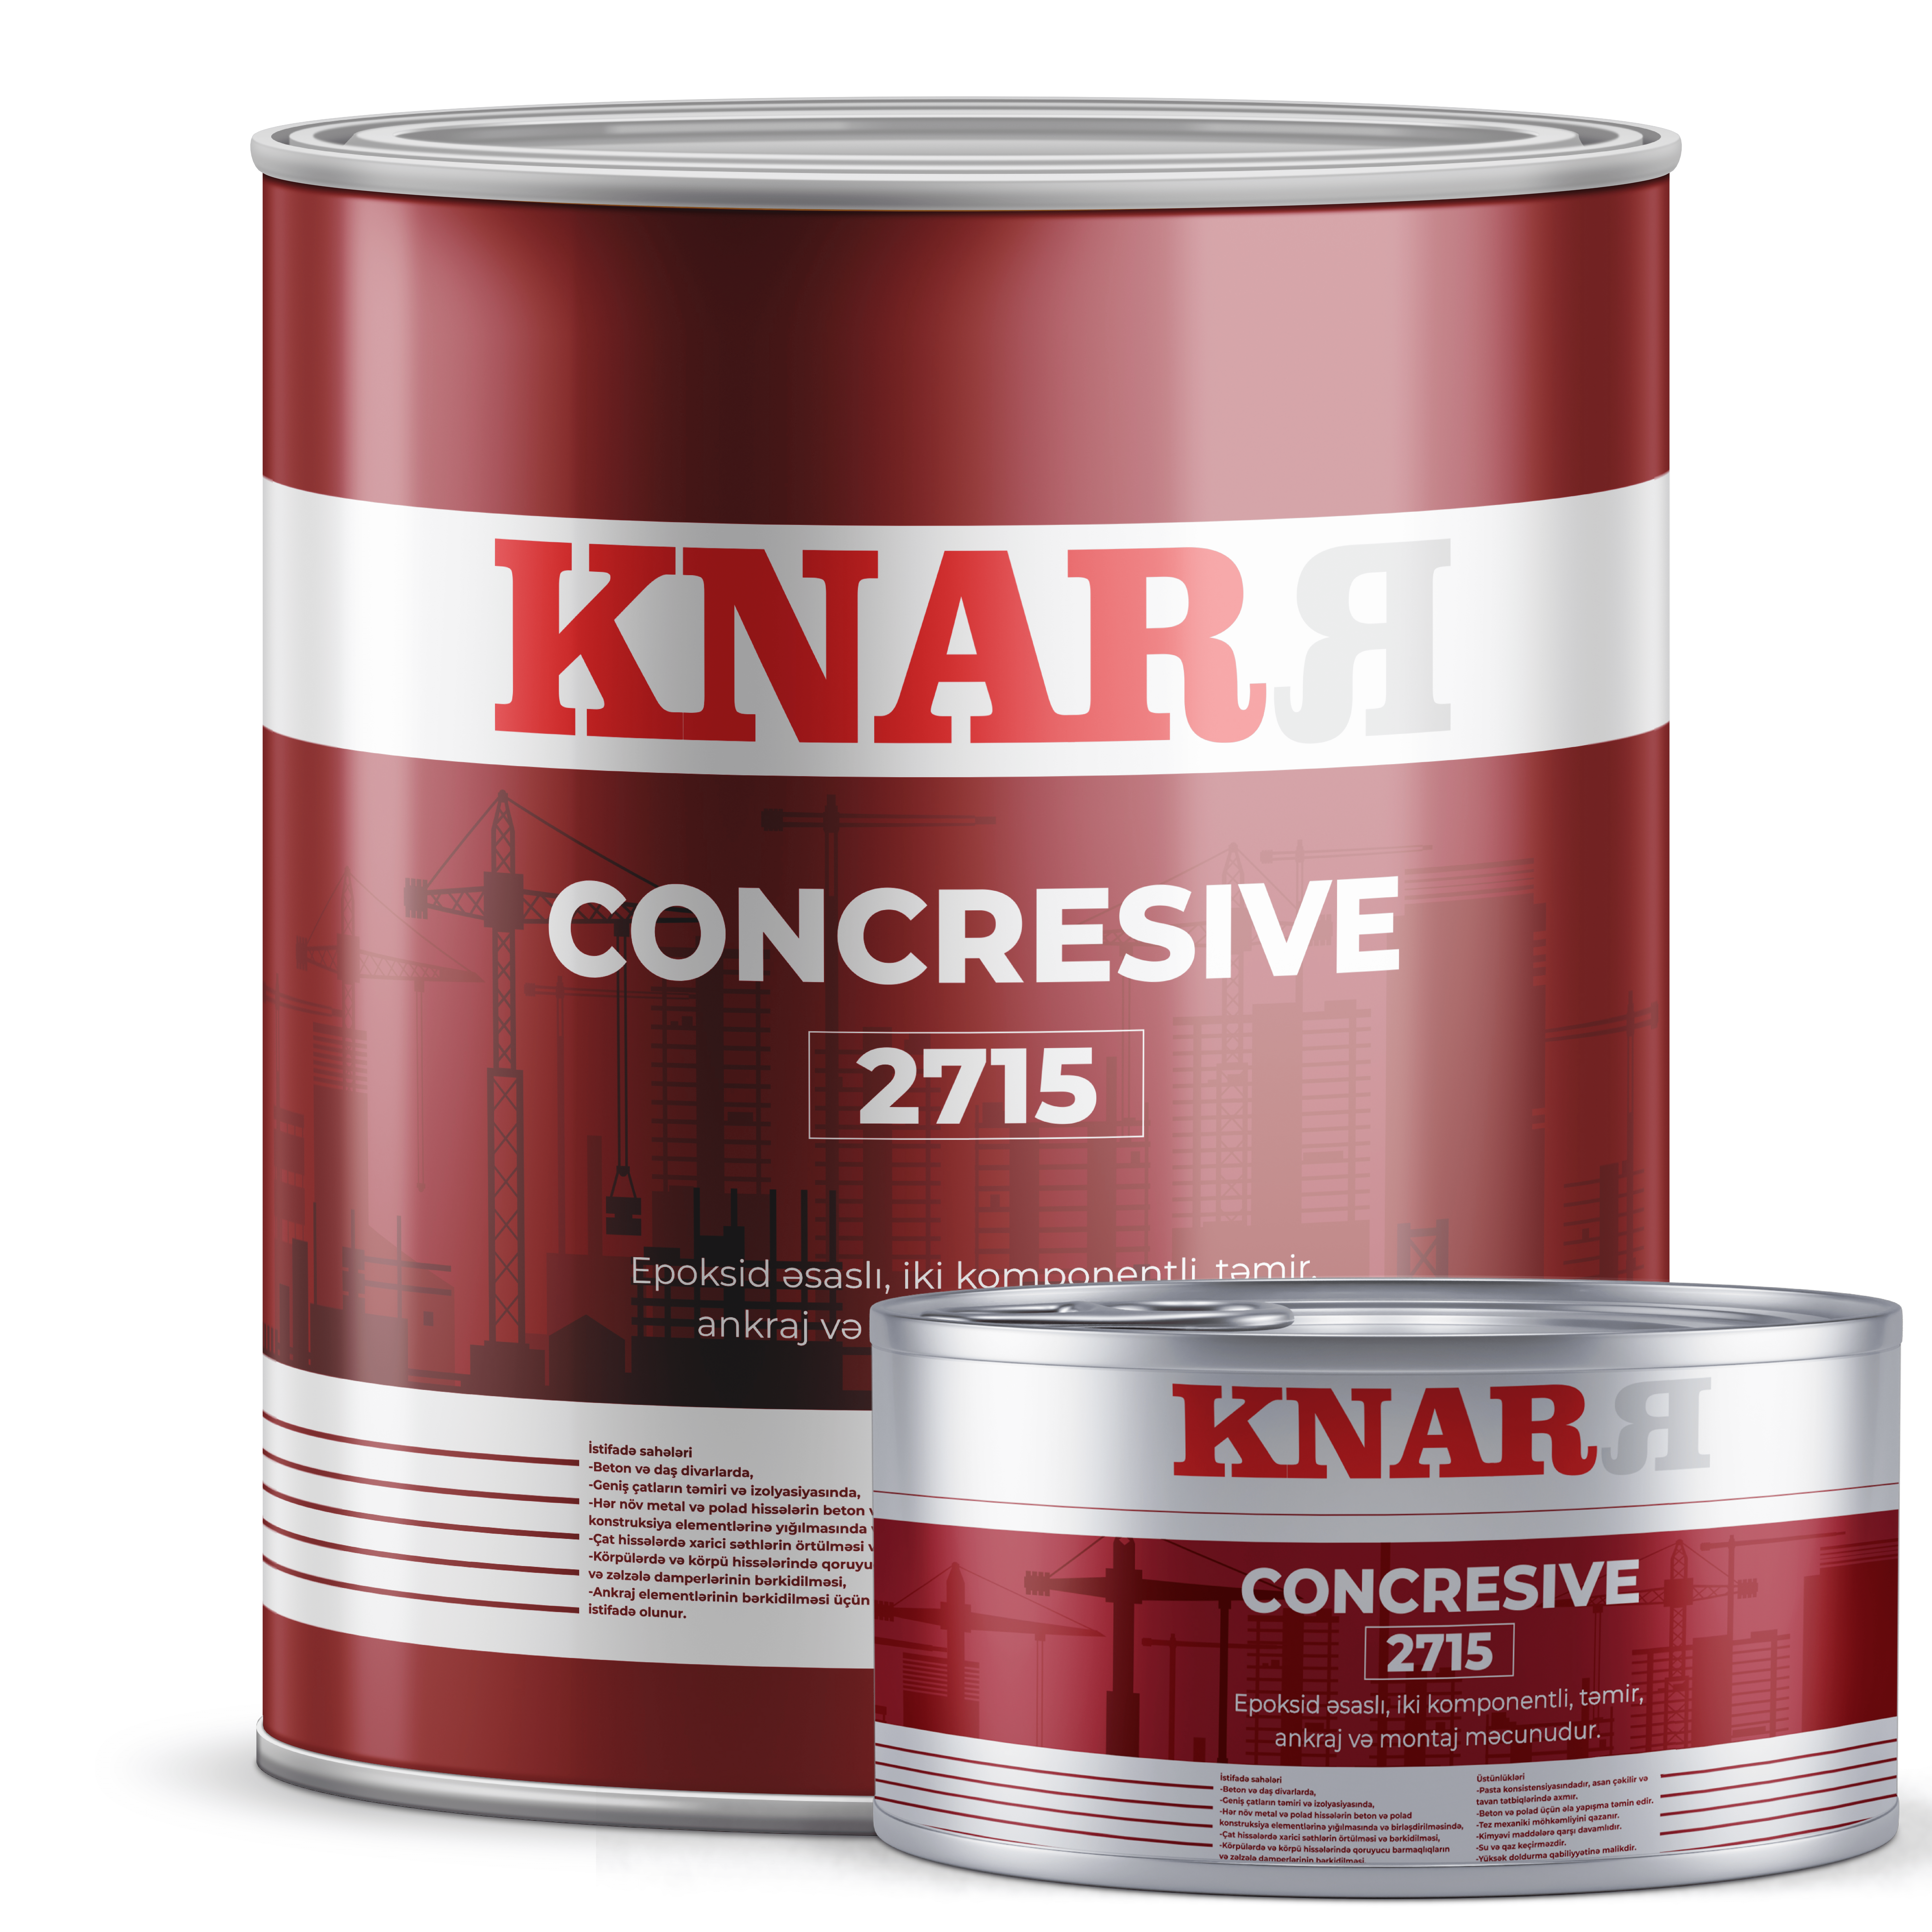 Knarr Concresive 2715 FD